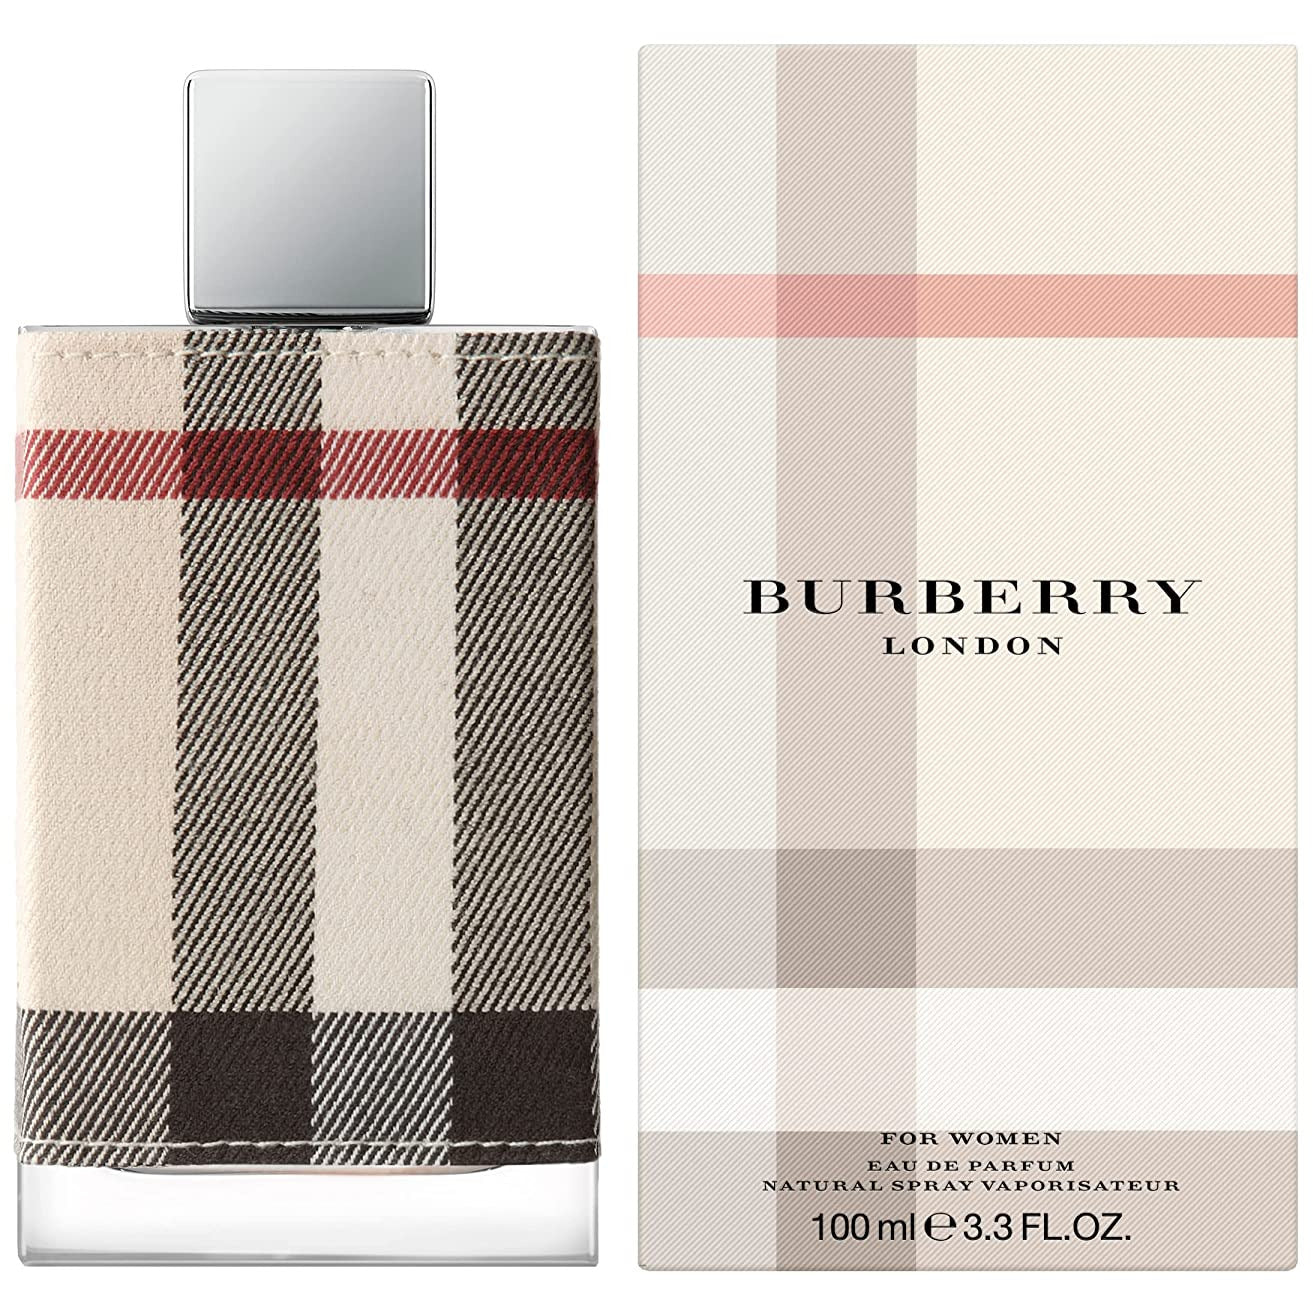    Burberry-London-For-Women-perfume